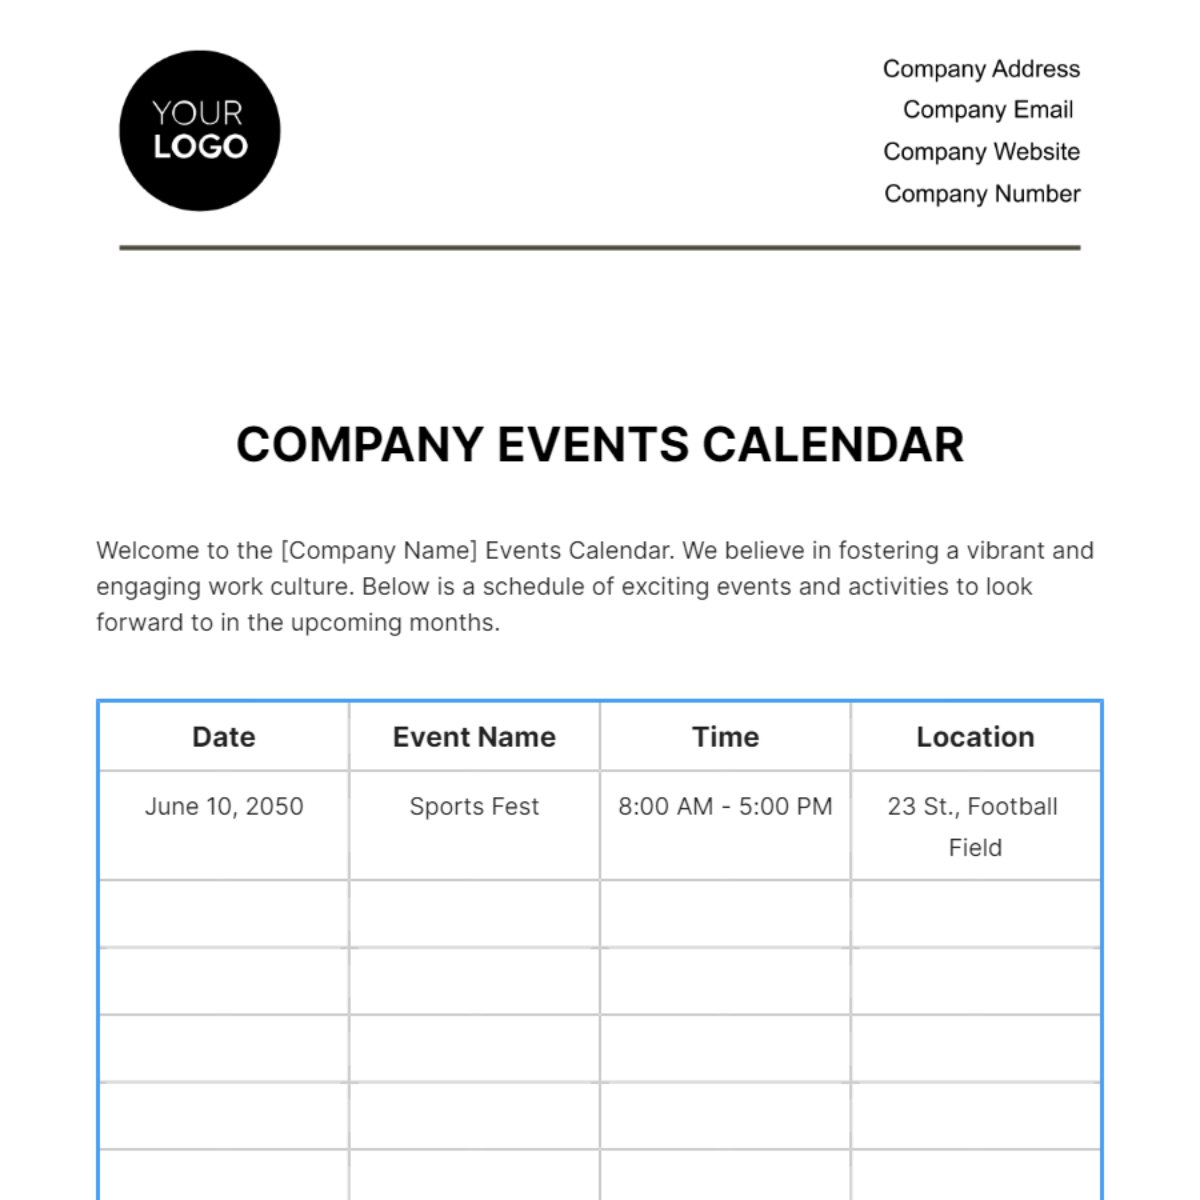 Company Events Calendar HR Template